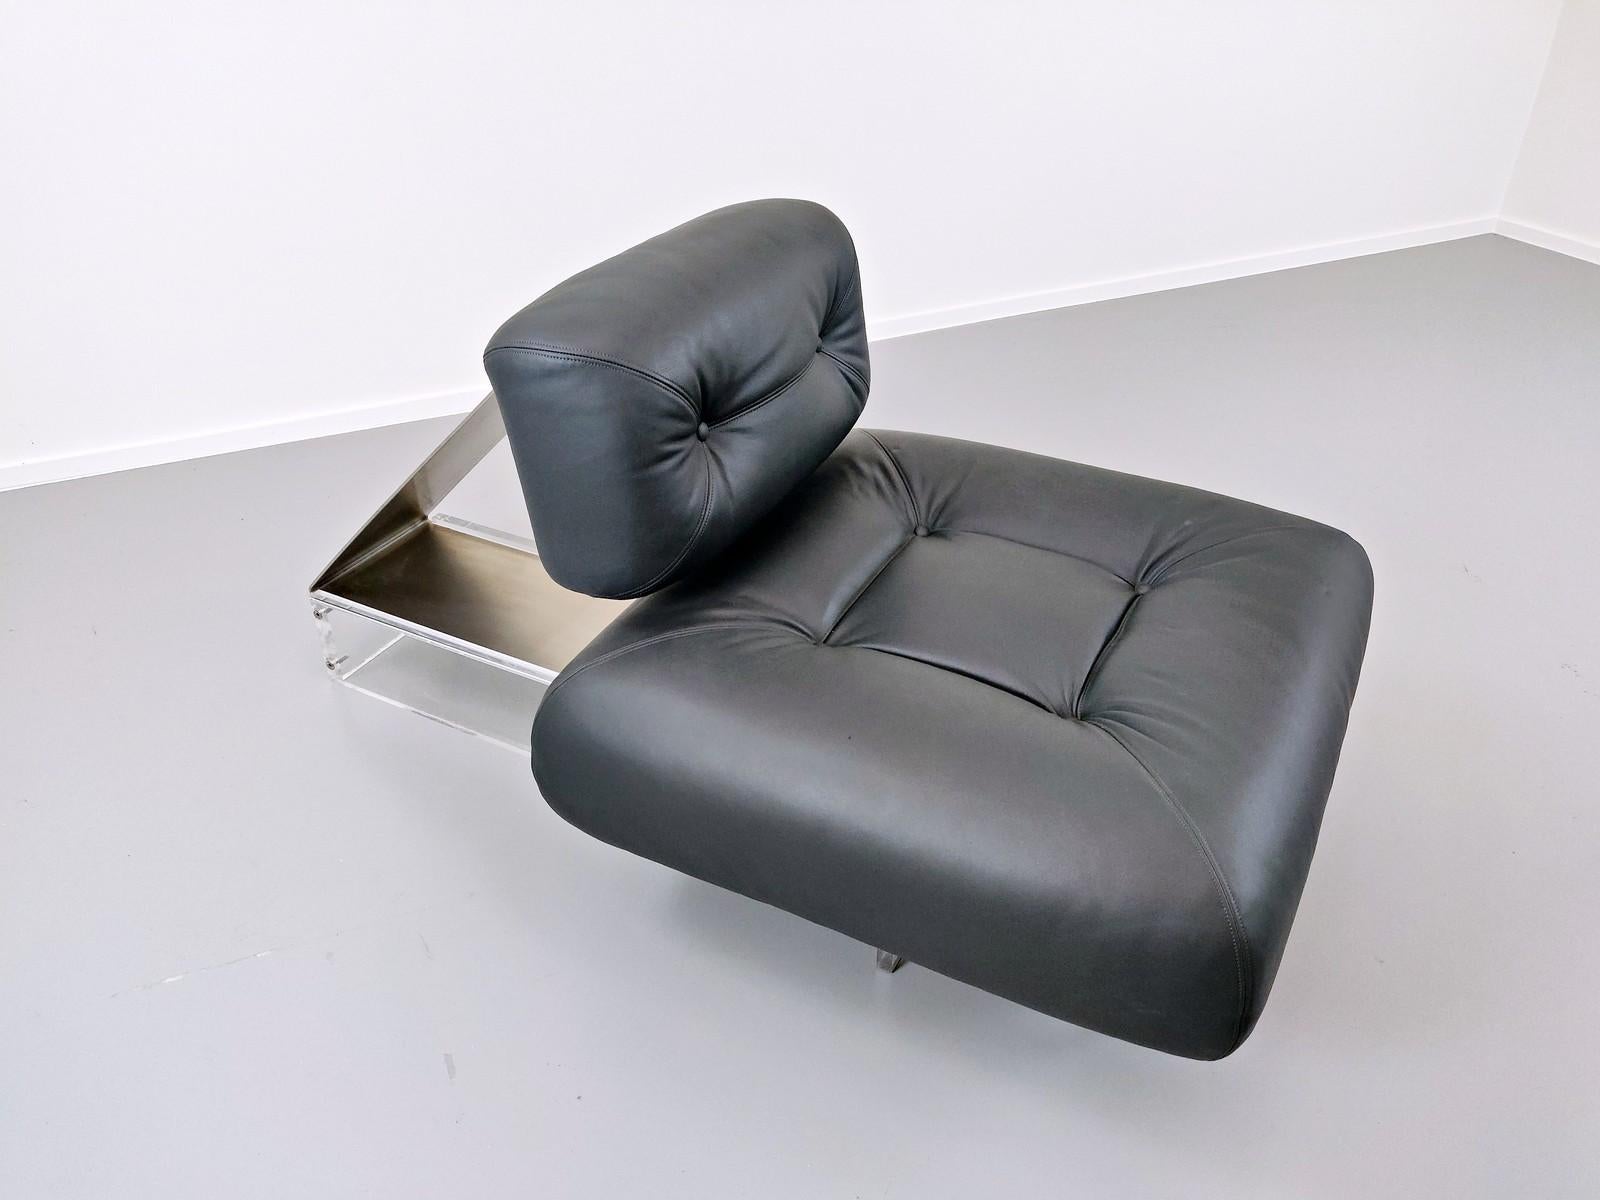 Late 20th Century Mid-Century Modern Plexiglass chair by Oscar Niemeyer for Burgo complex-1977